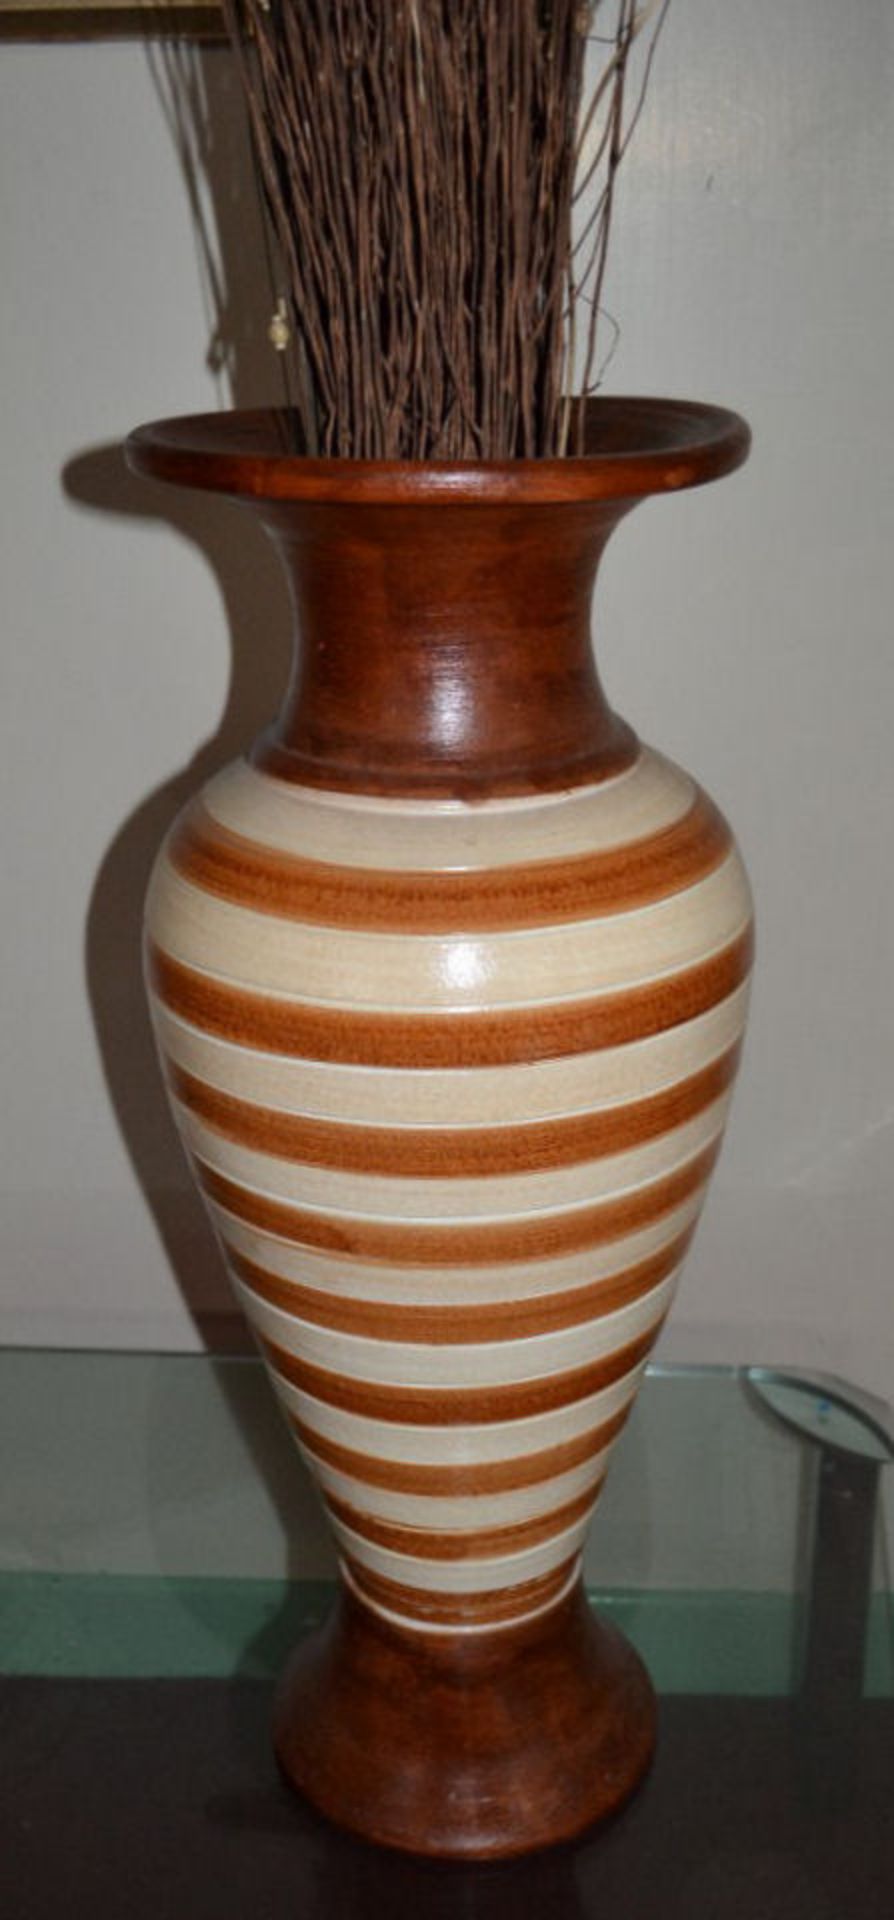 5 Assorted Decorative Vases - See Description For Details - Image 12 of 19